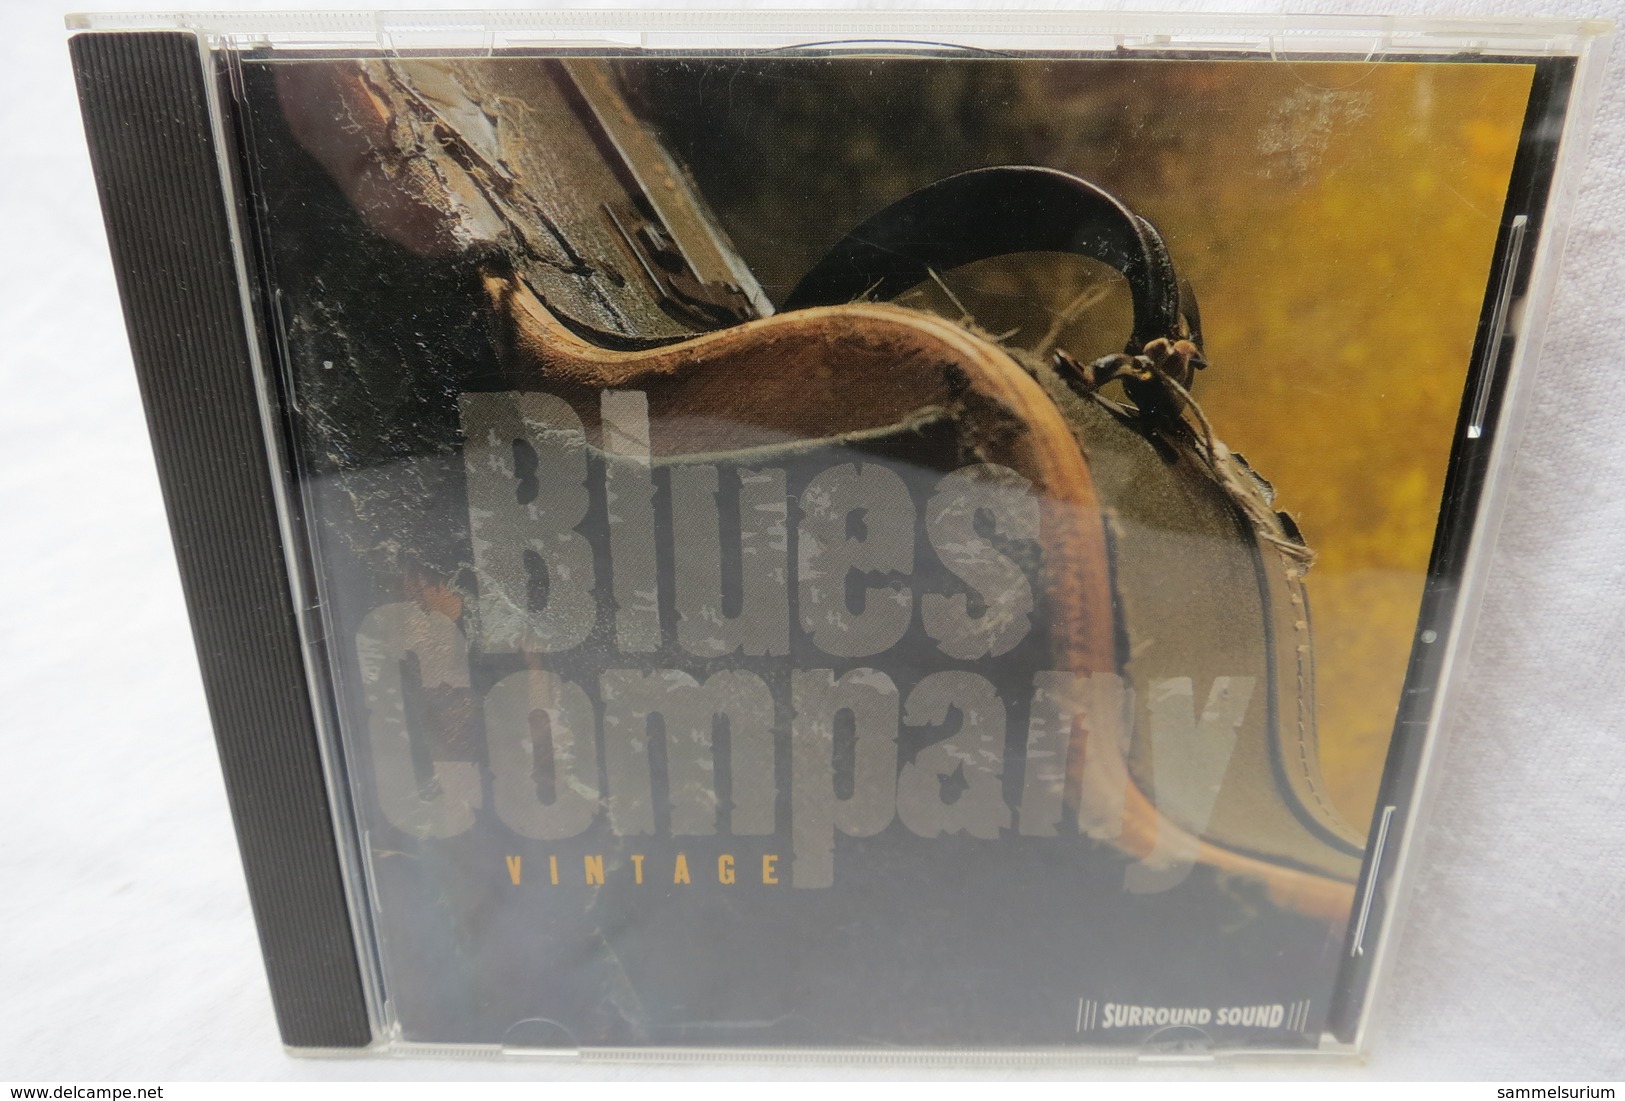 CD "Blues Company" Vintage - Blues